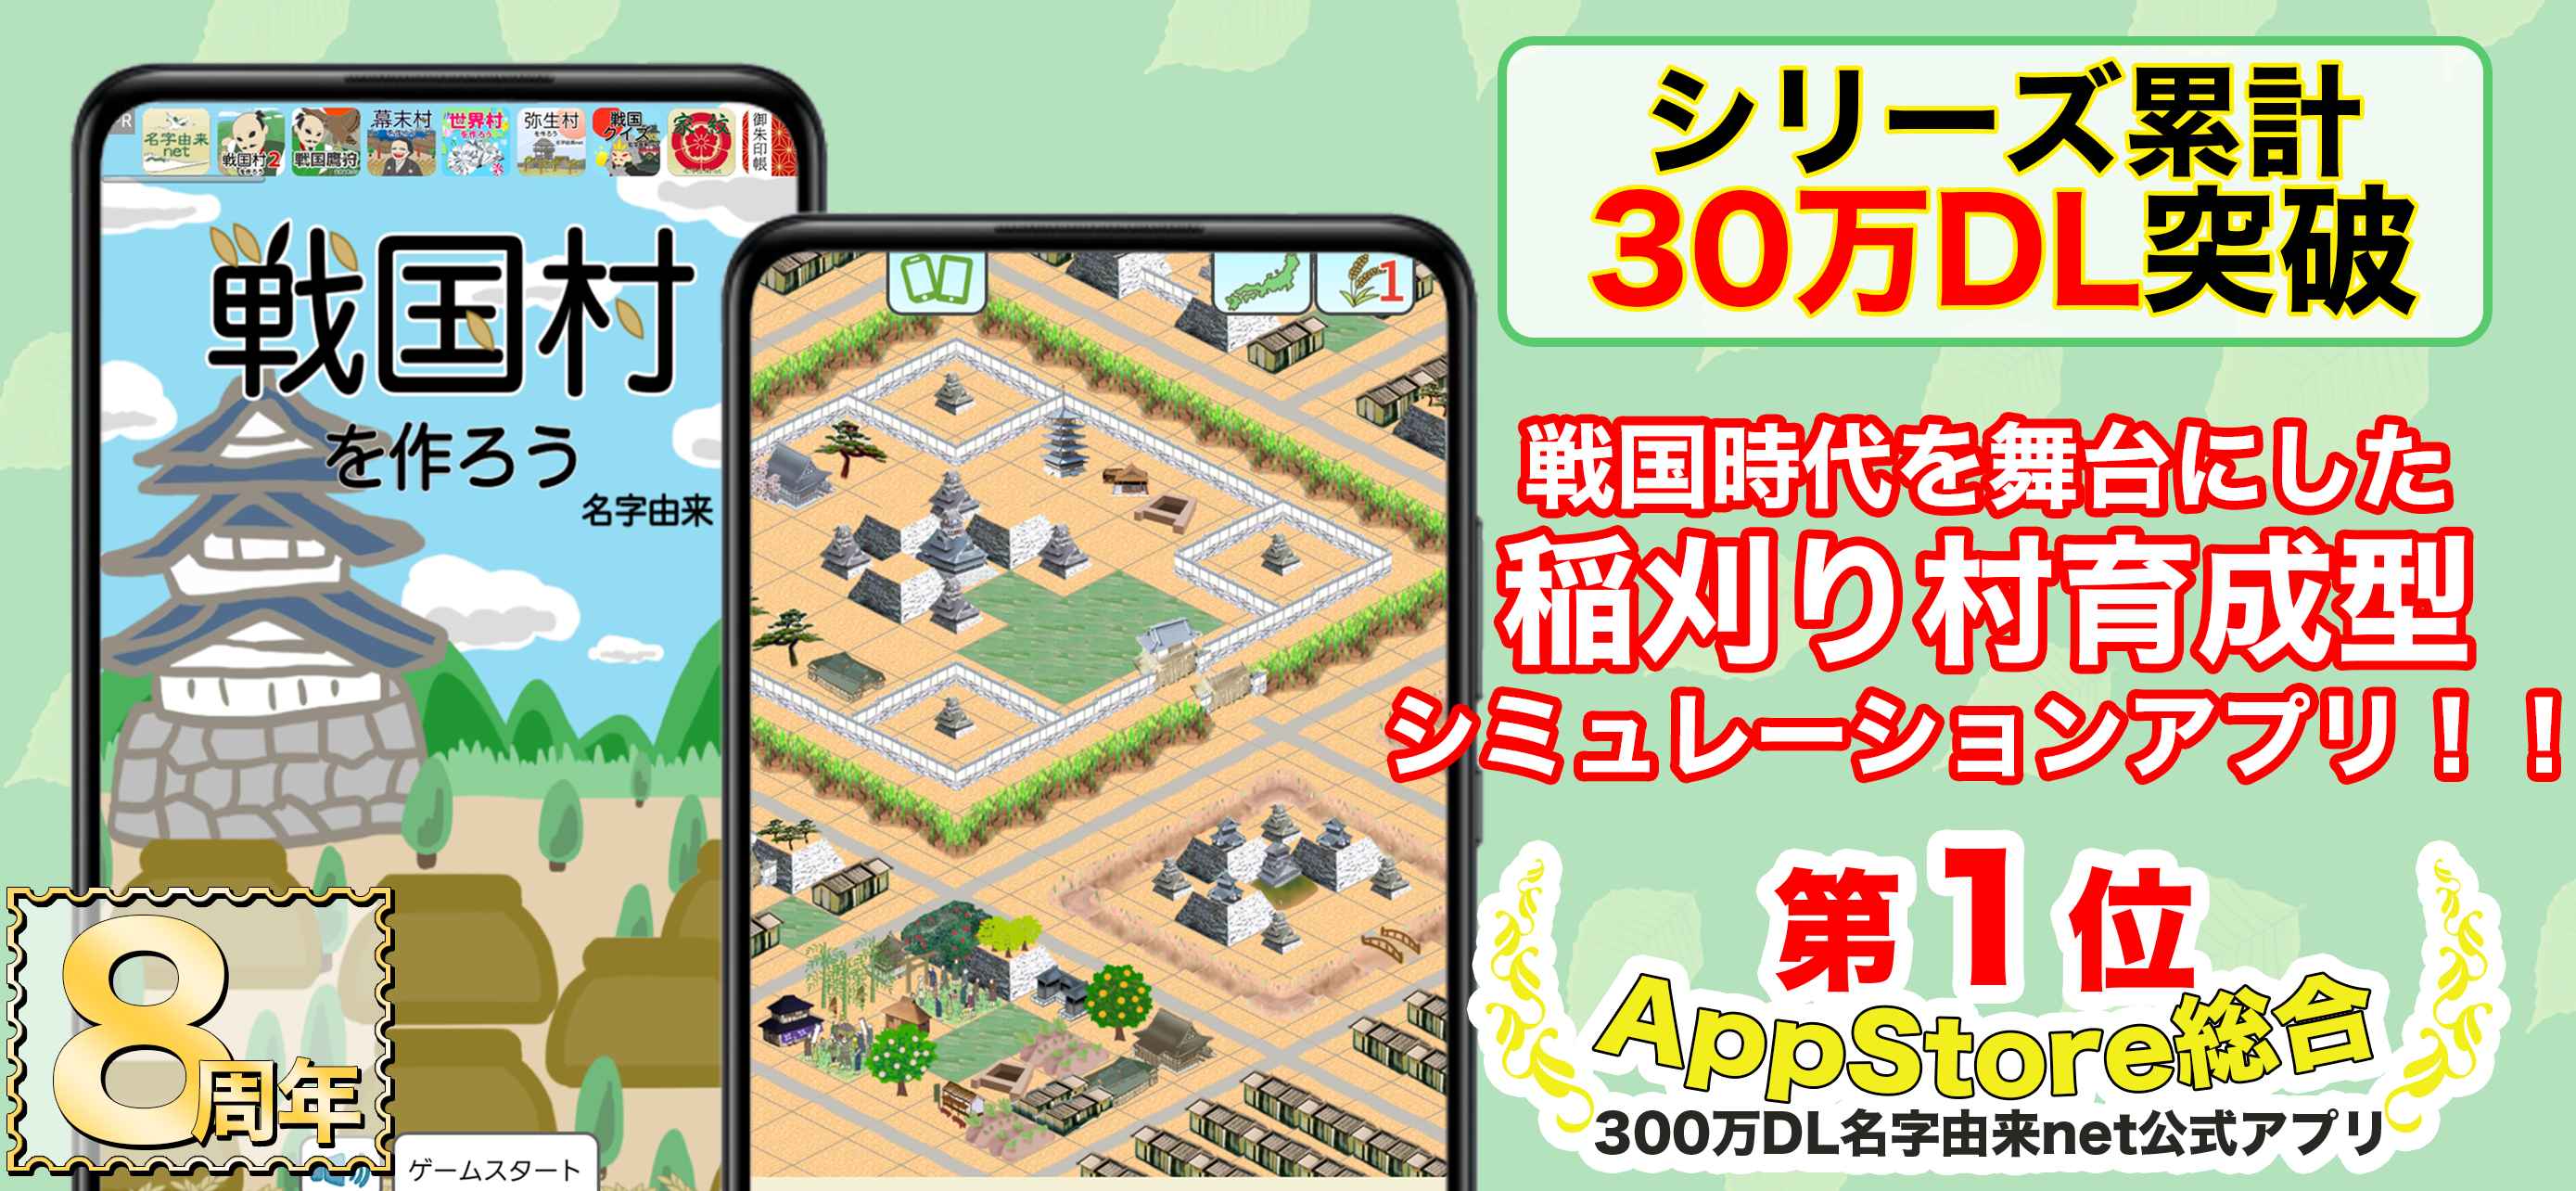 Screenshot 1 of Sengoku ရွာလေး လုပ်ကြရအောင်။ ရွာများကိုပြုစုပျိုးထောင်ရန်အတွက် ဆန်စပါးရိတ်သိမ်းခြင်းနှင့် တိုက်ပွဲတိုက်ပွဲများဆင်နွှဲခြင်း Sengoku စစ်ဘုရင်များနှင့်အတူ ကမ္ဘာကြီးကို ပေါင်းစည်းရန် ရည်ရွယ်ချက်။ 9.0.8